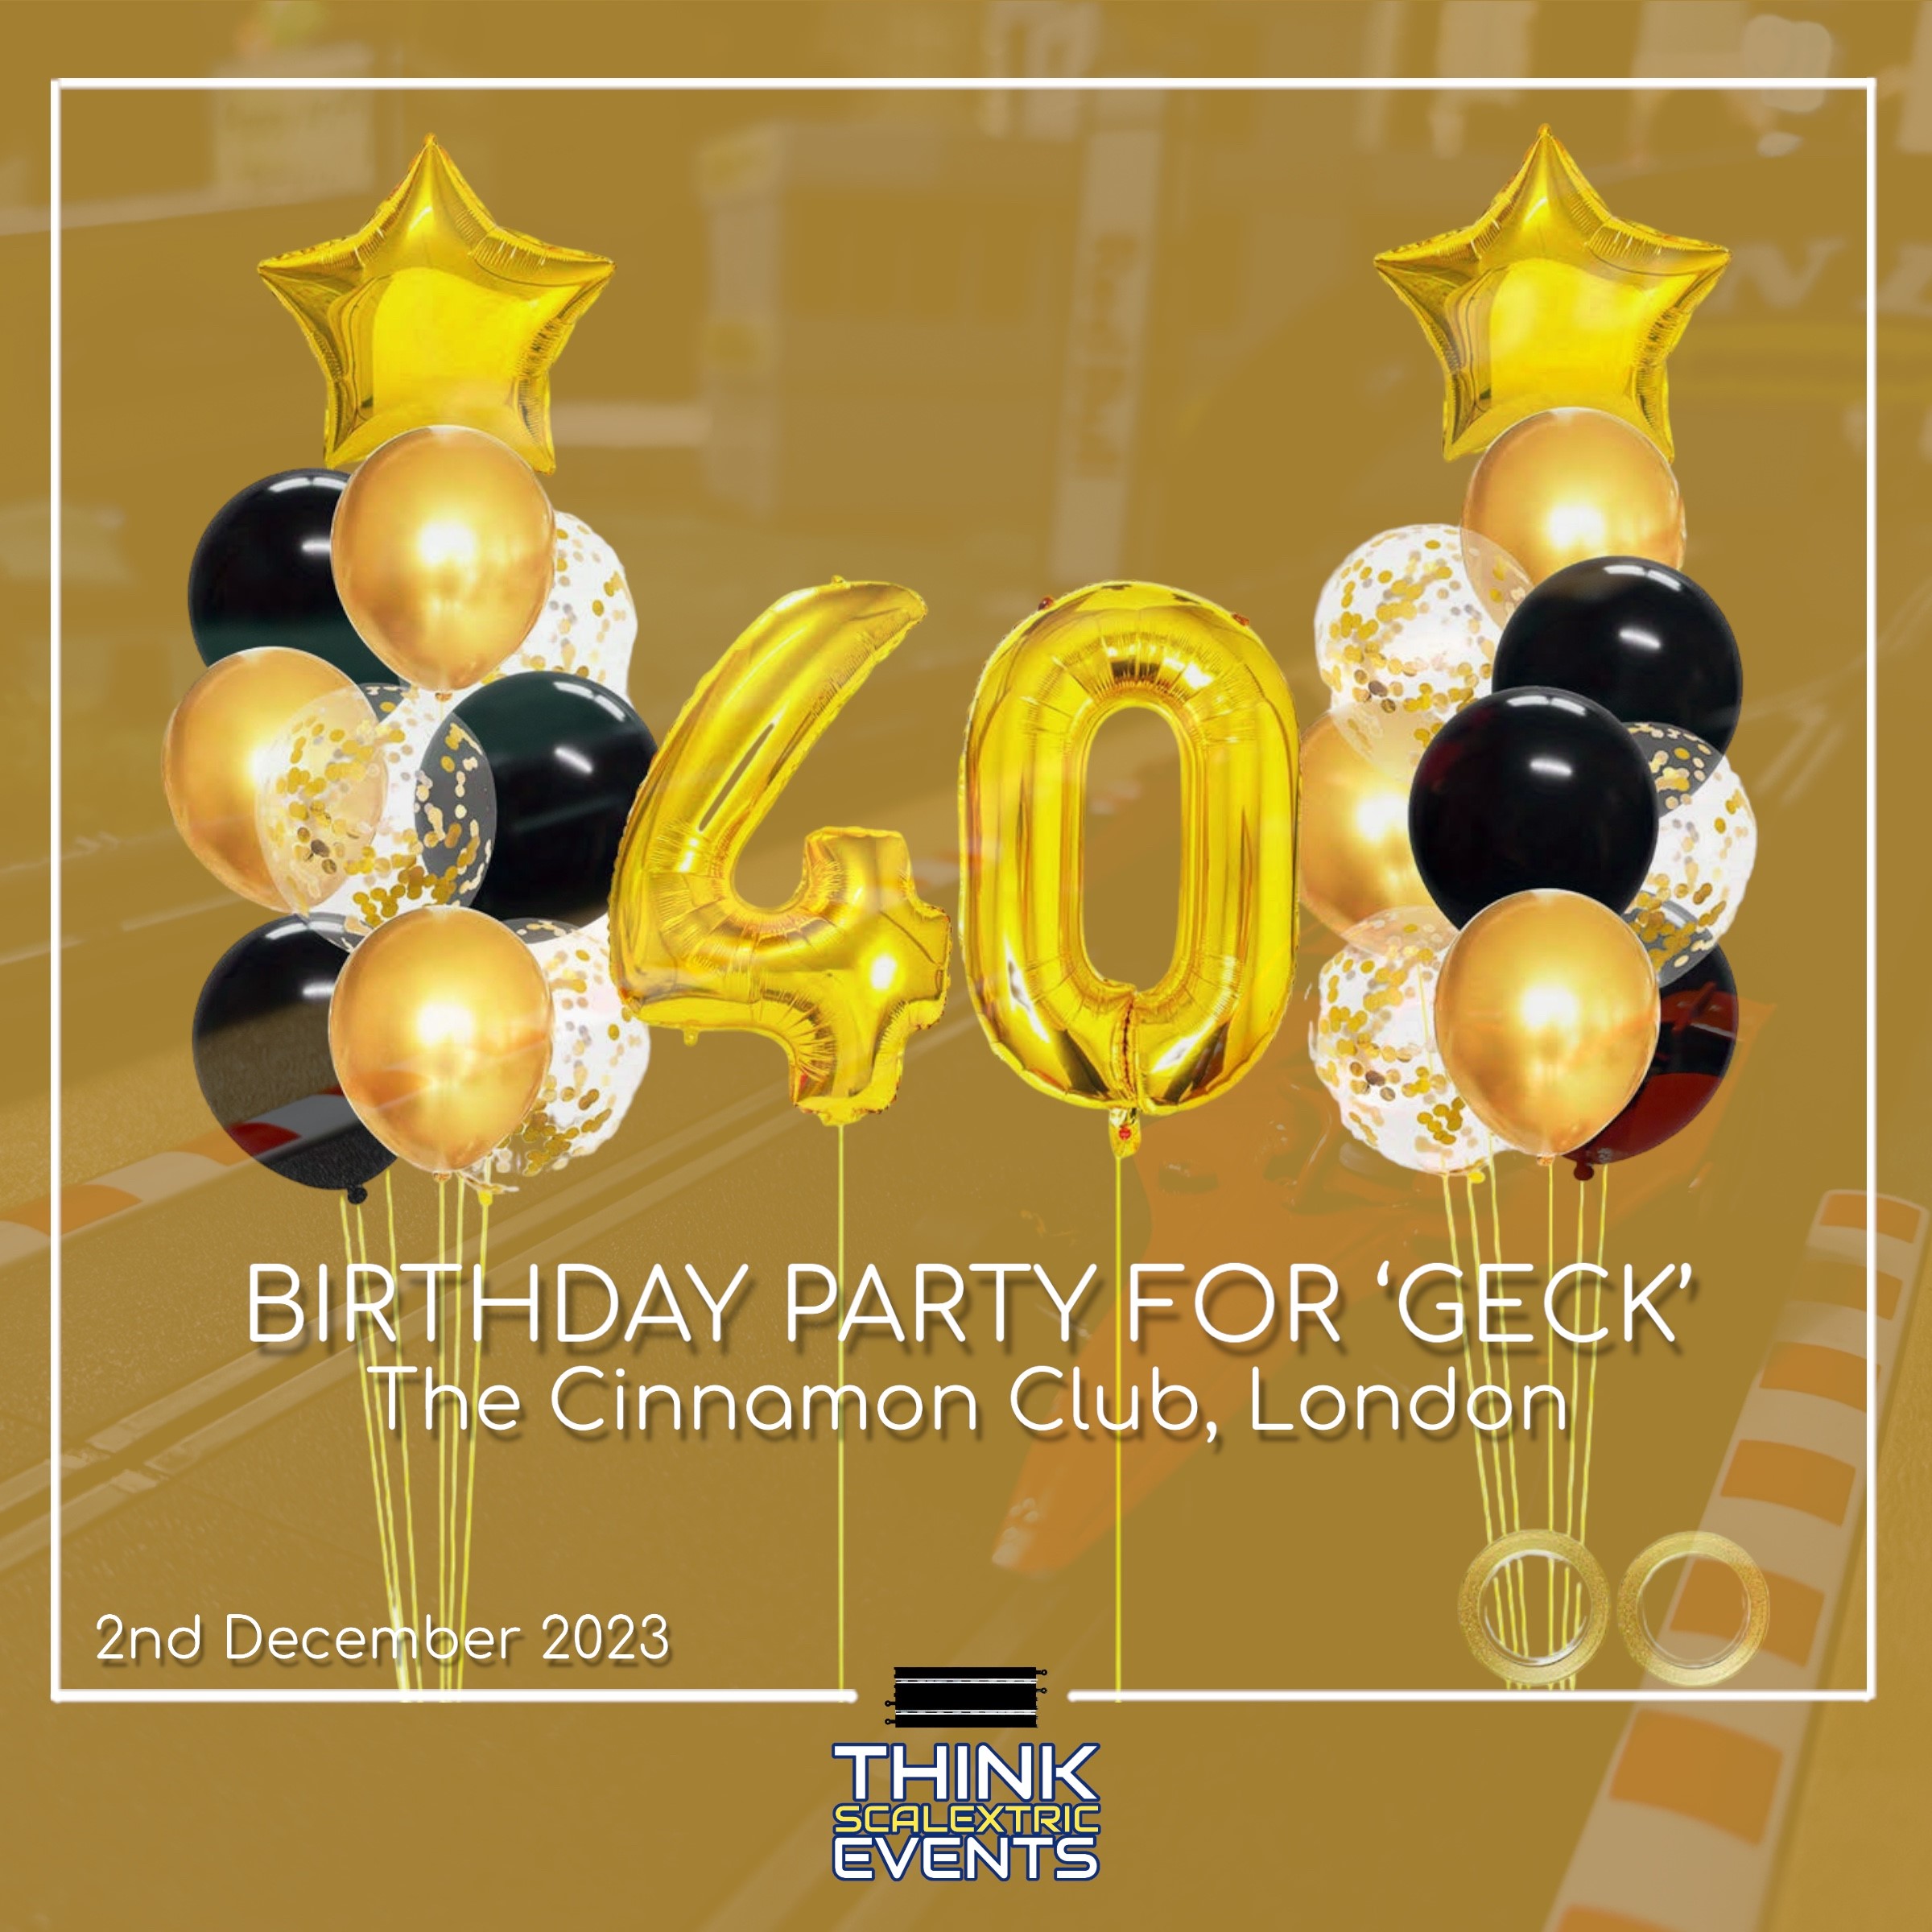 Geck 40th birthday party december 2023